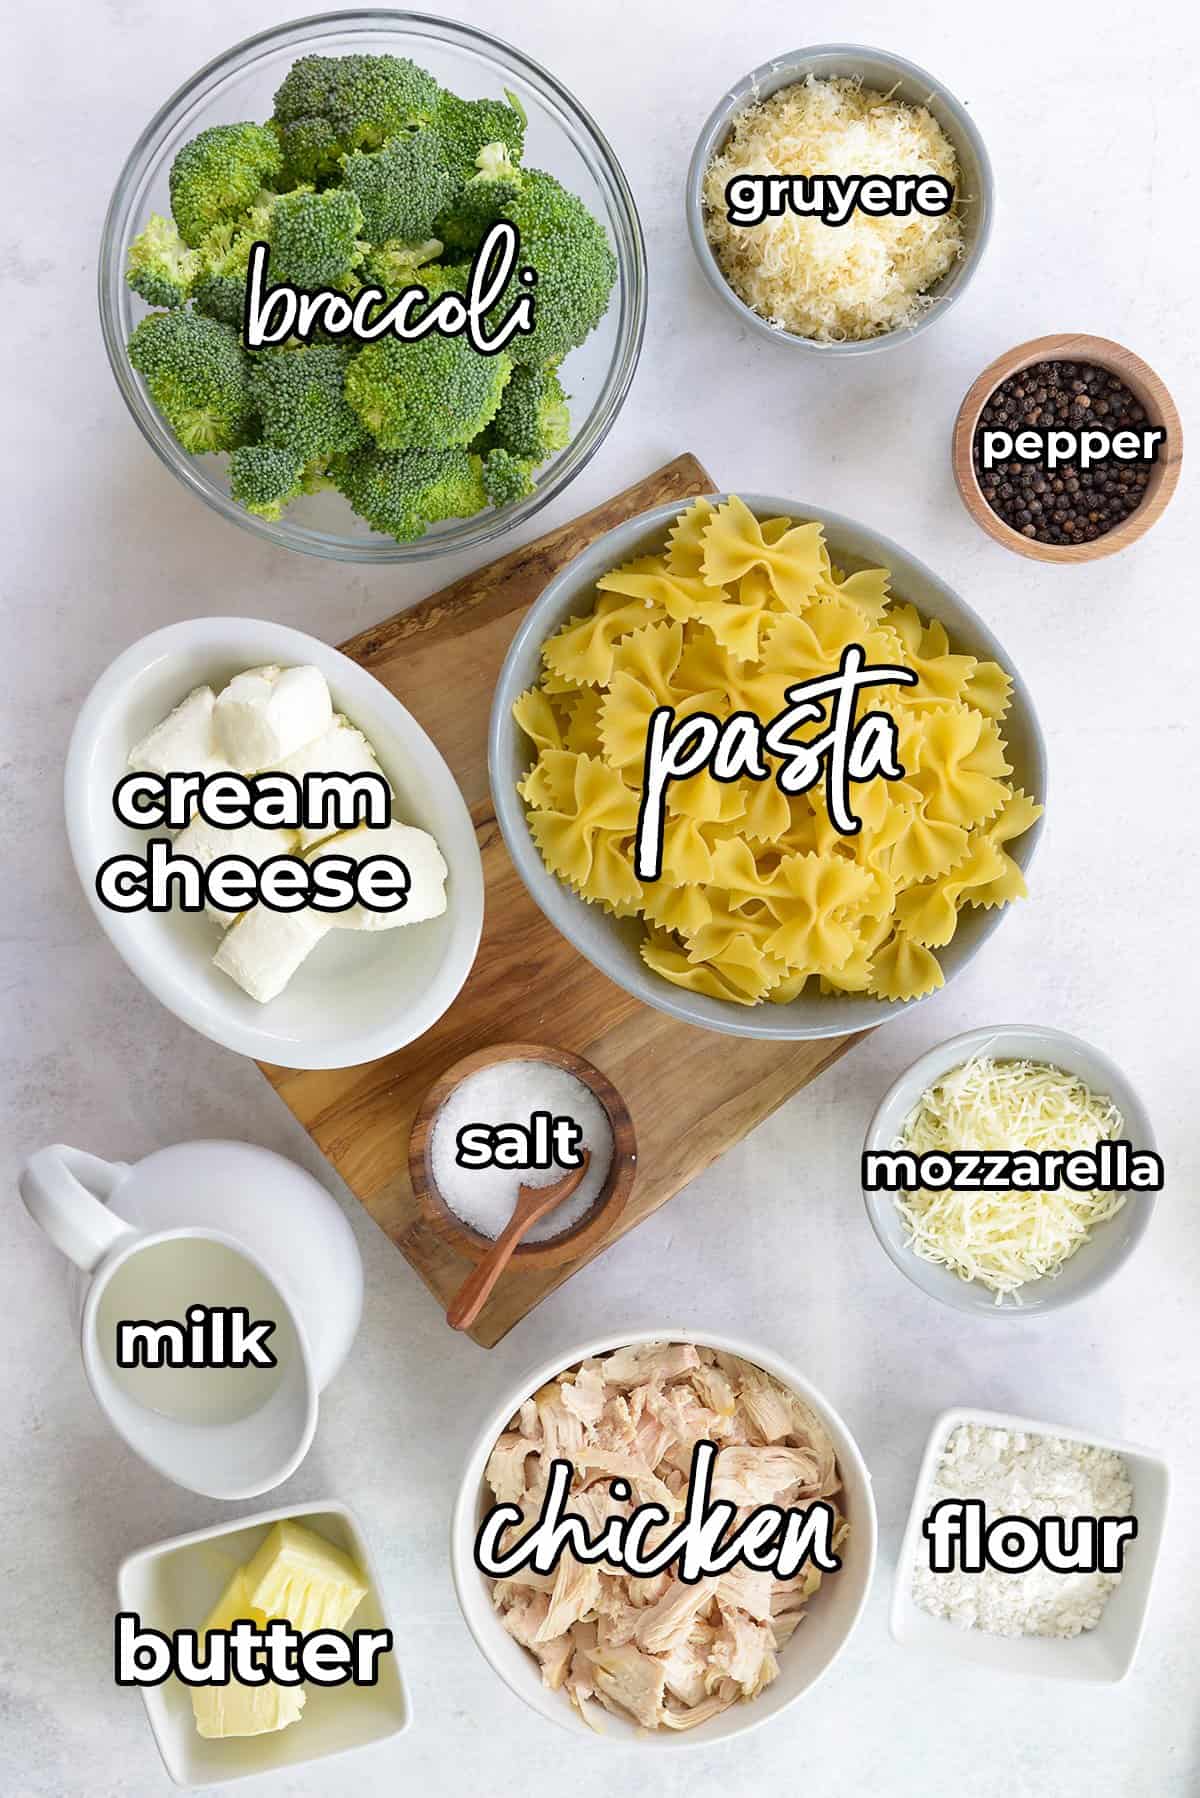 ingredients for chicken broccoli pasta recipe.